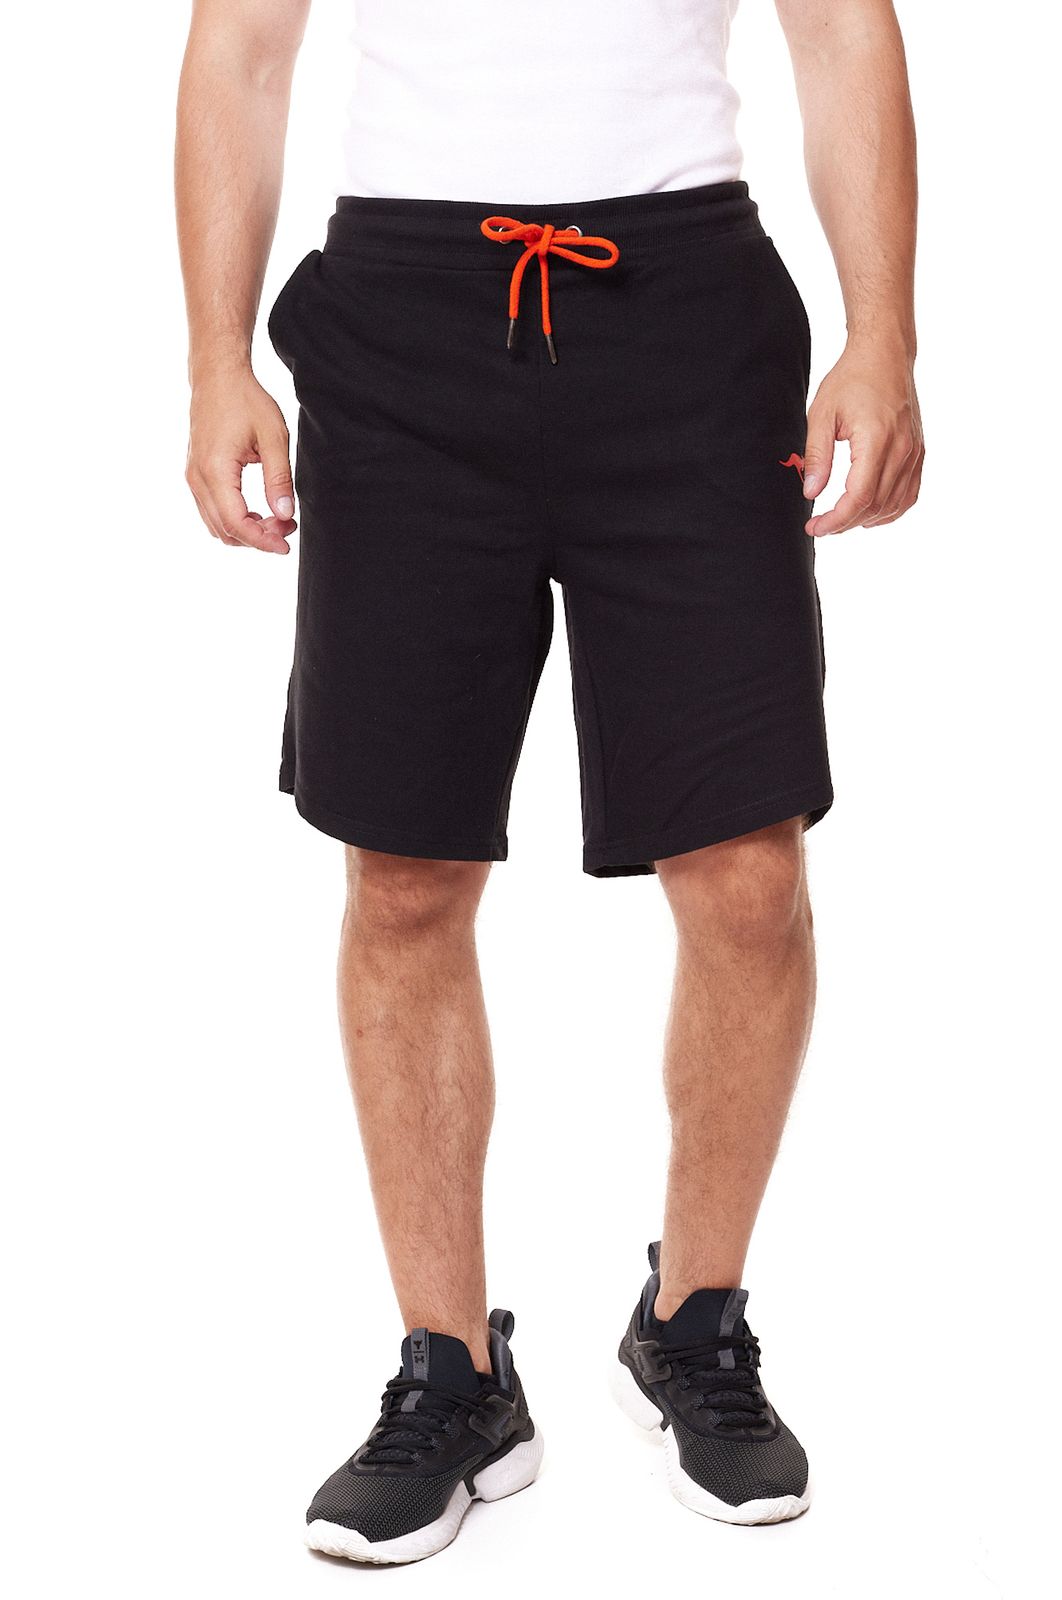 KangaROOS Herren Sweat-Shorts bequeme kurze Hose Schwarz/Orange von KangaROOS